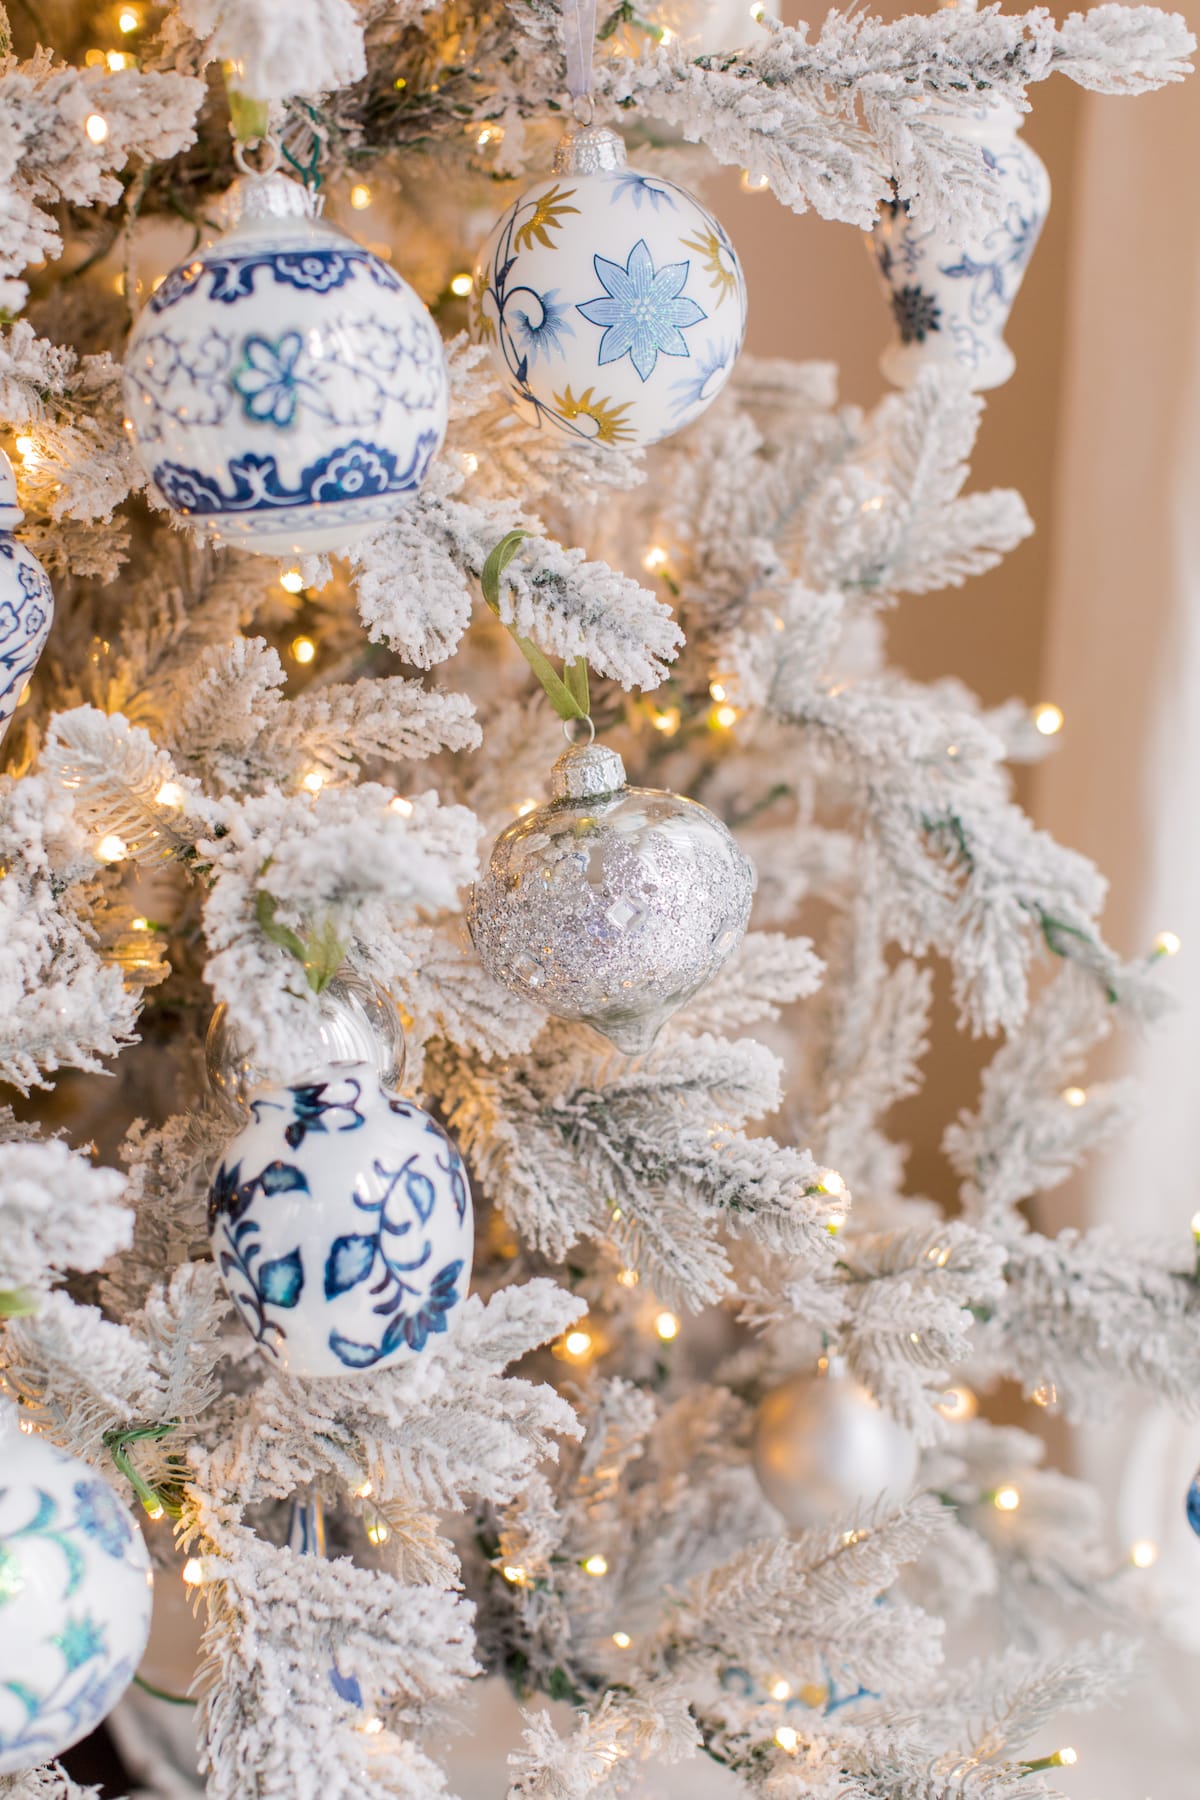 Our Blue & White Christmas Tree - Fashionable Hostess